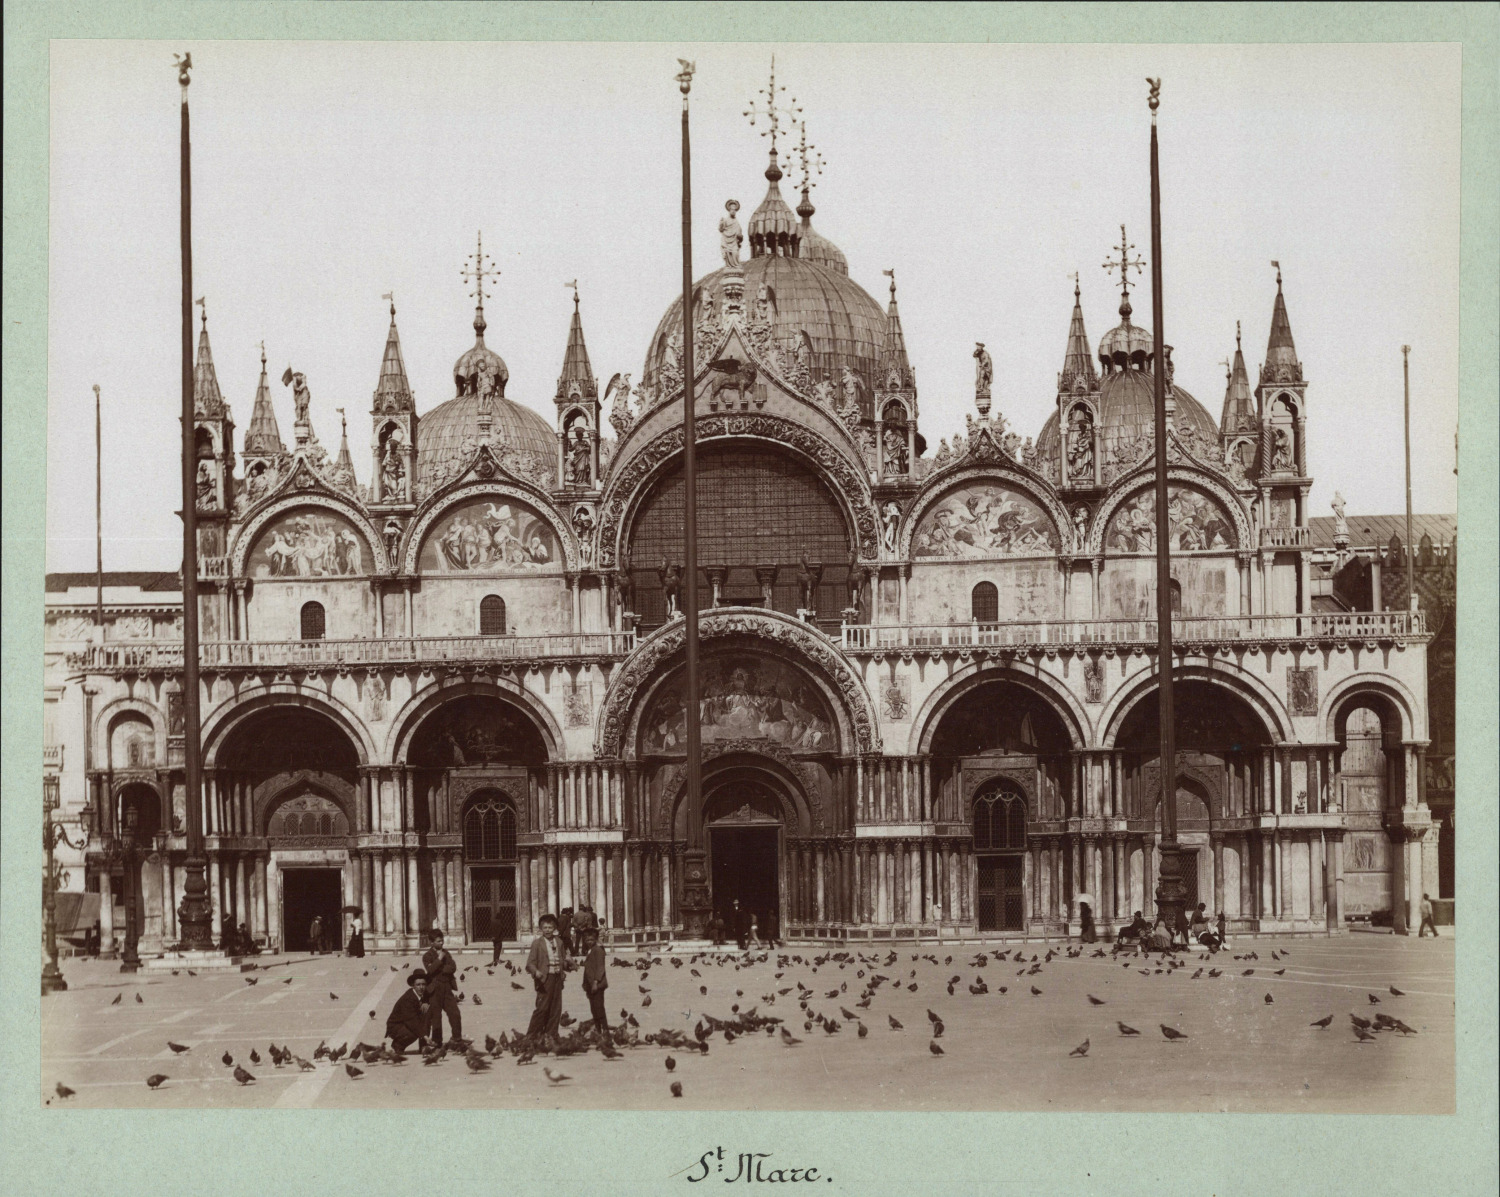 Italy, Venice, St. Mark's Basilica, ca.1880, vintage print vintage print vintage print, le